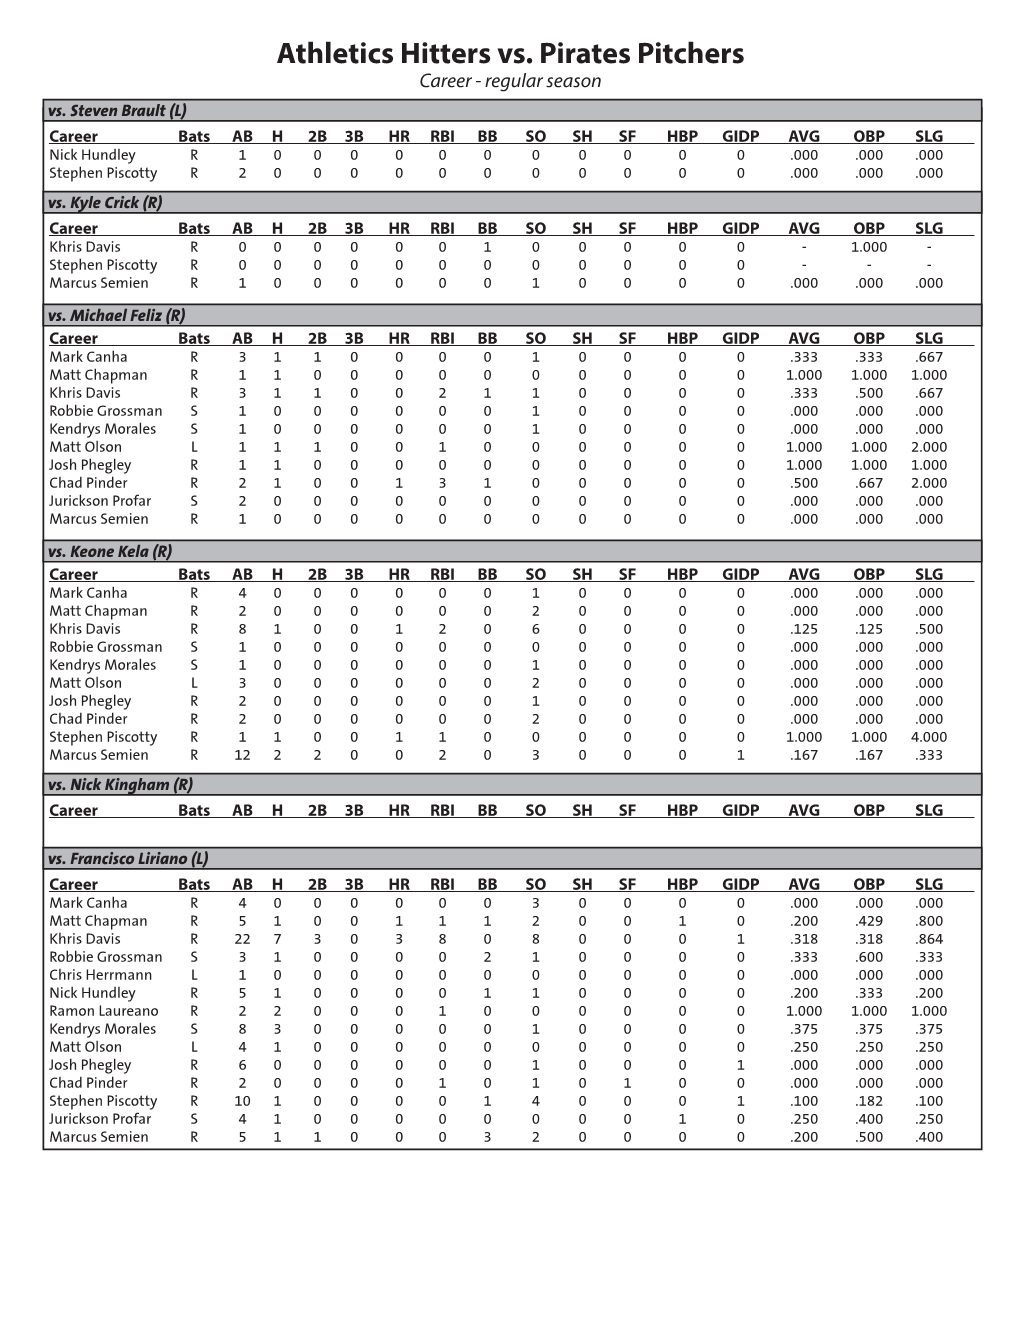 Athletics Hitters Vs. Pirates Pitchers Career - Regular Season Vs